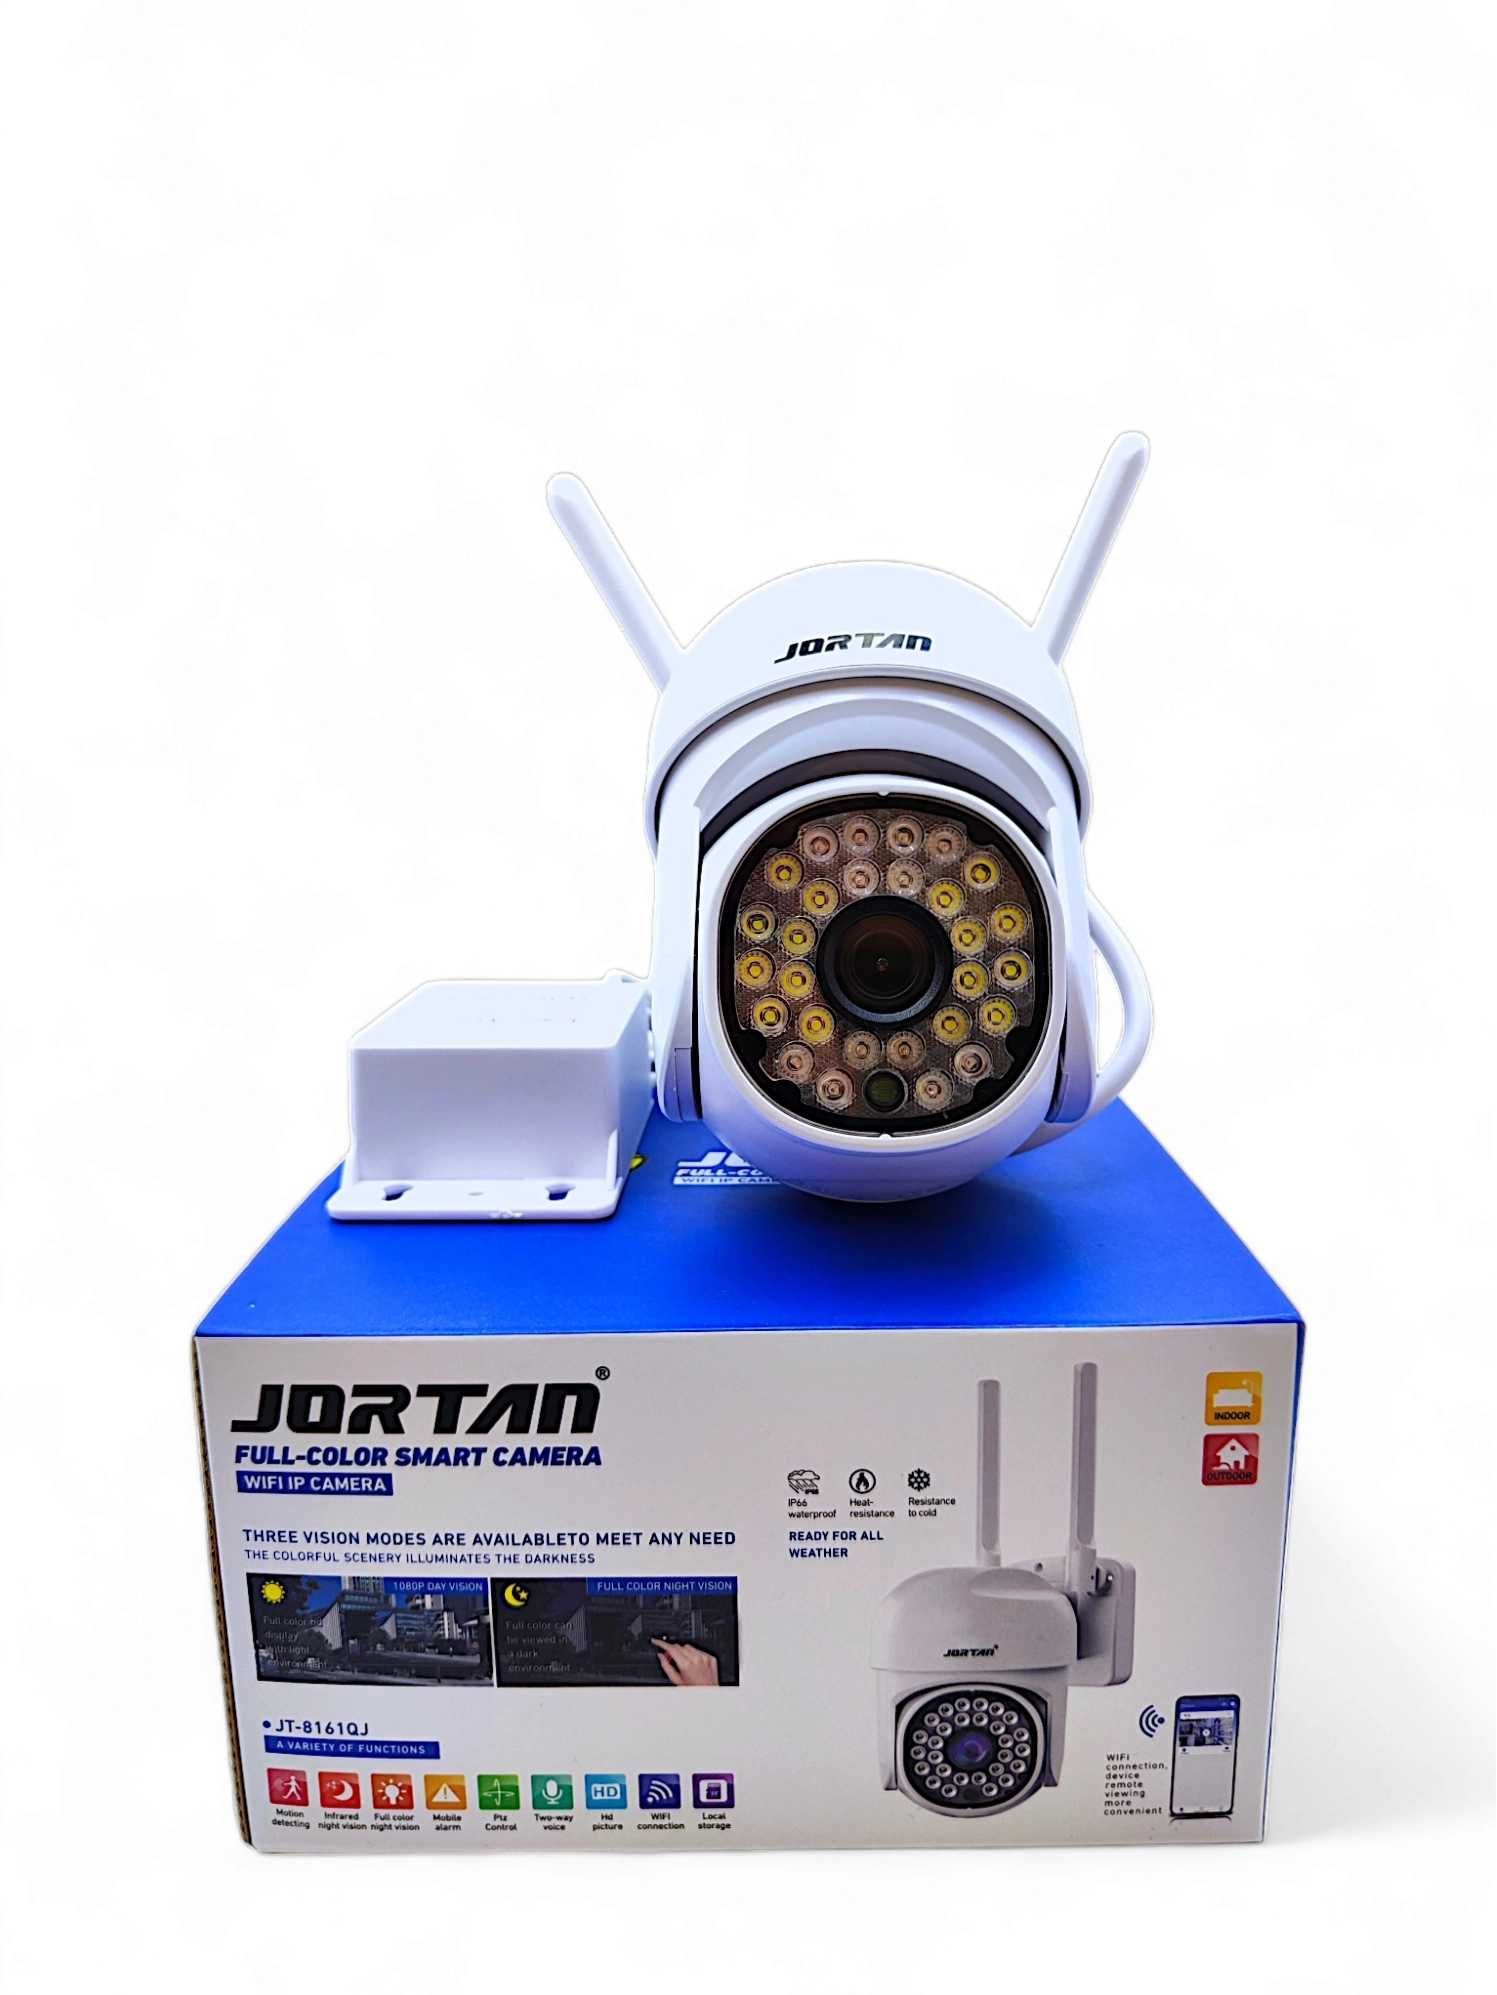 Camera Supraveghere, Jortan, Wifi, IP 360 Camera, FHD
2MP